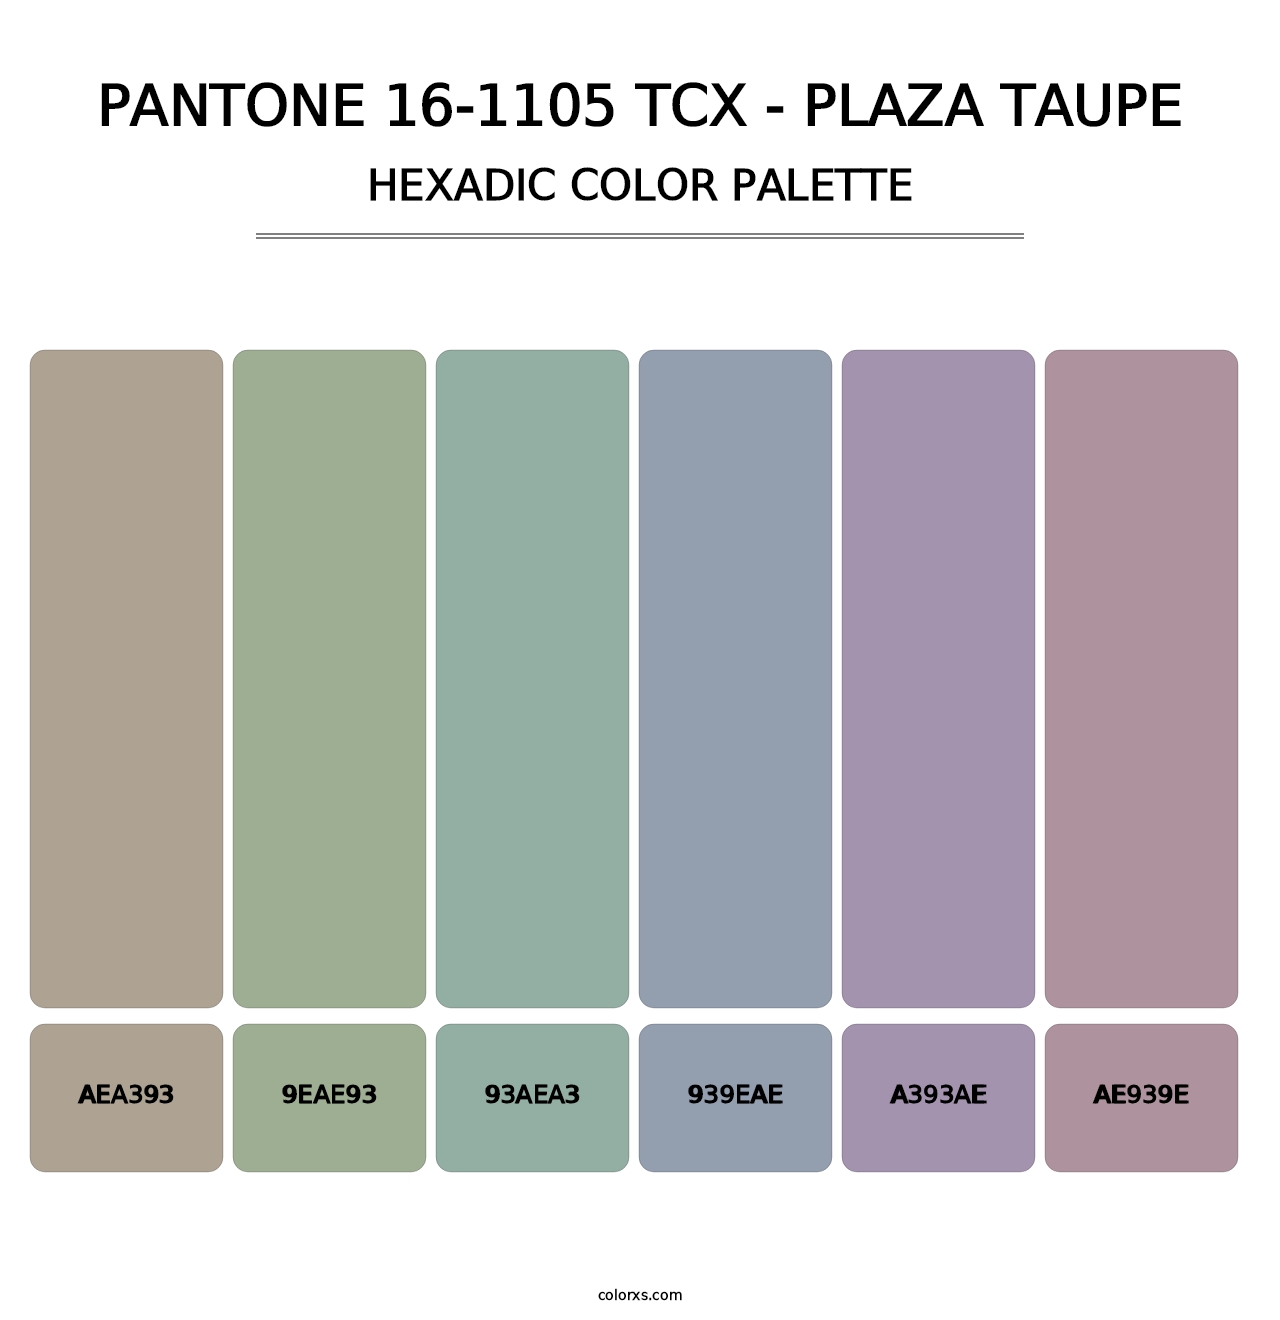 PANTONE 16-1105 TCX - Plaza Taupe - Hexadic Color Palette